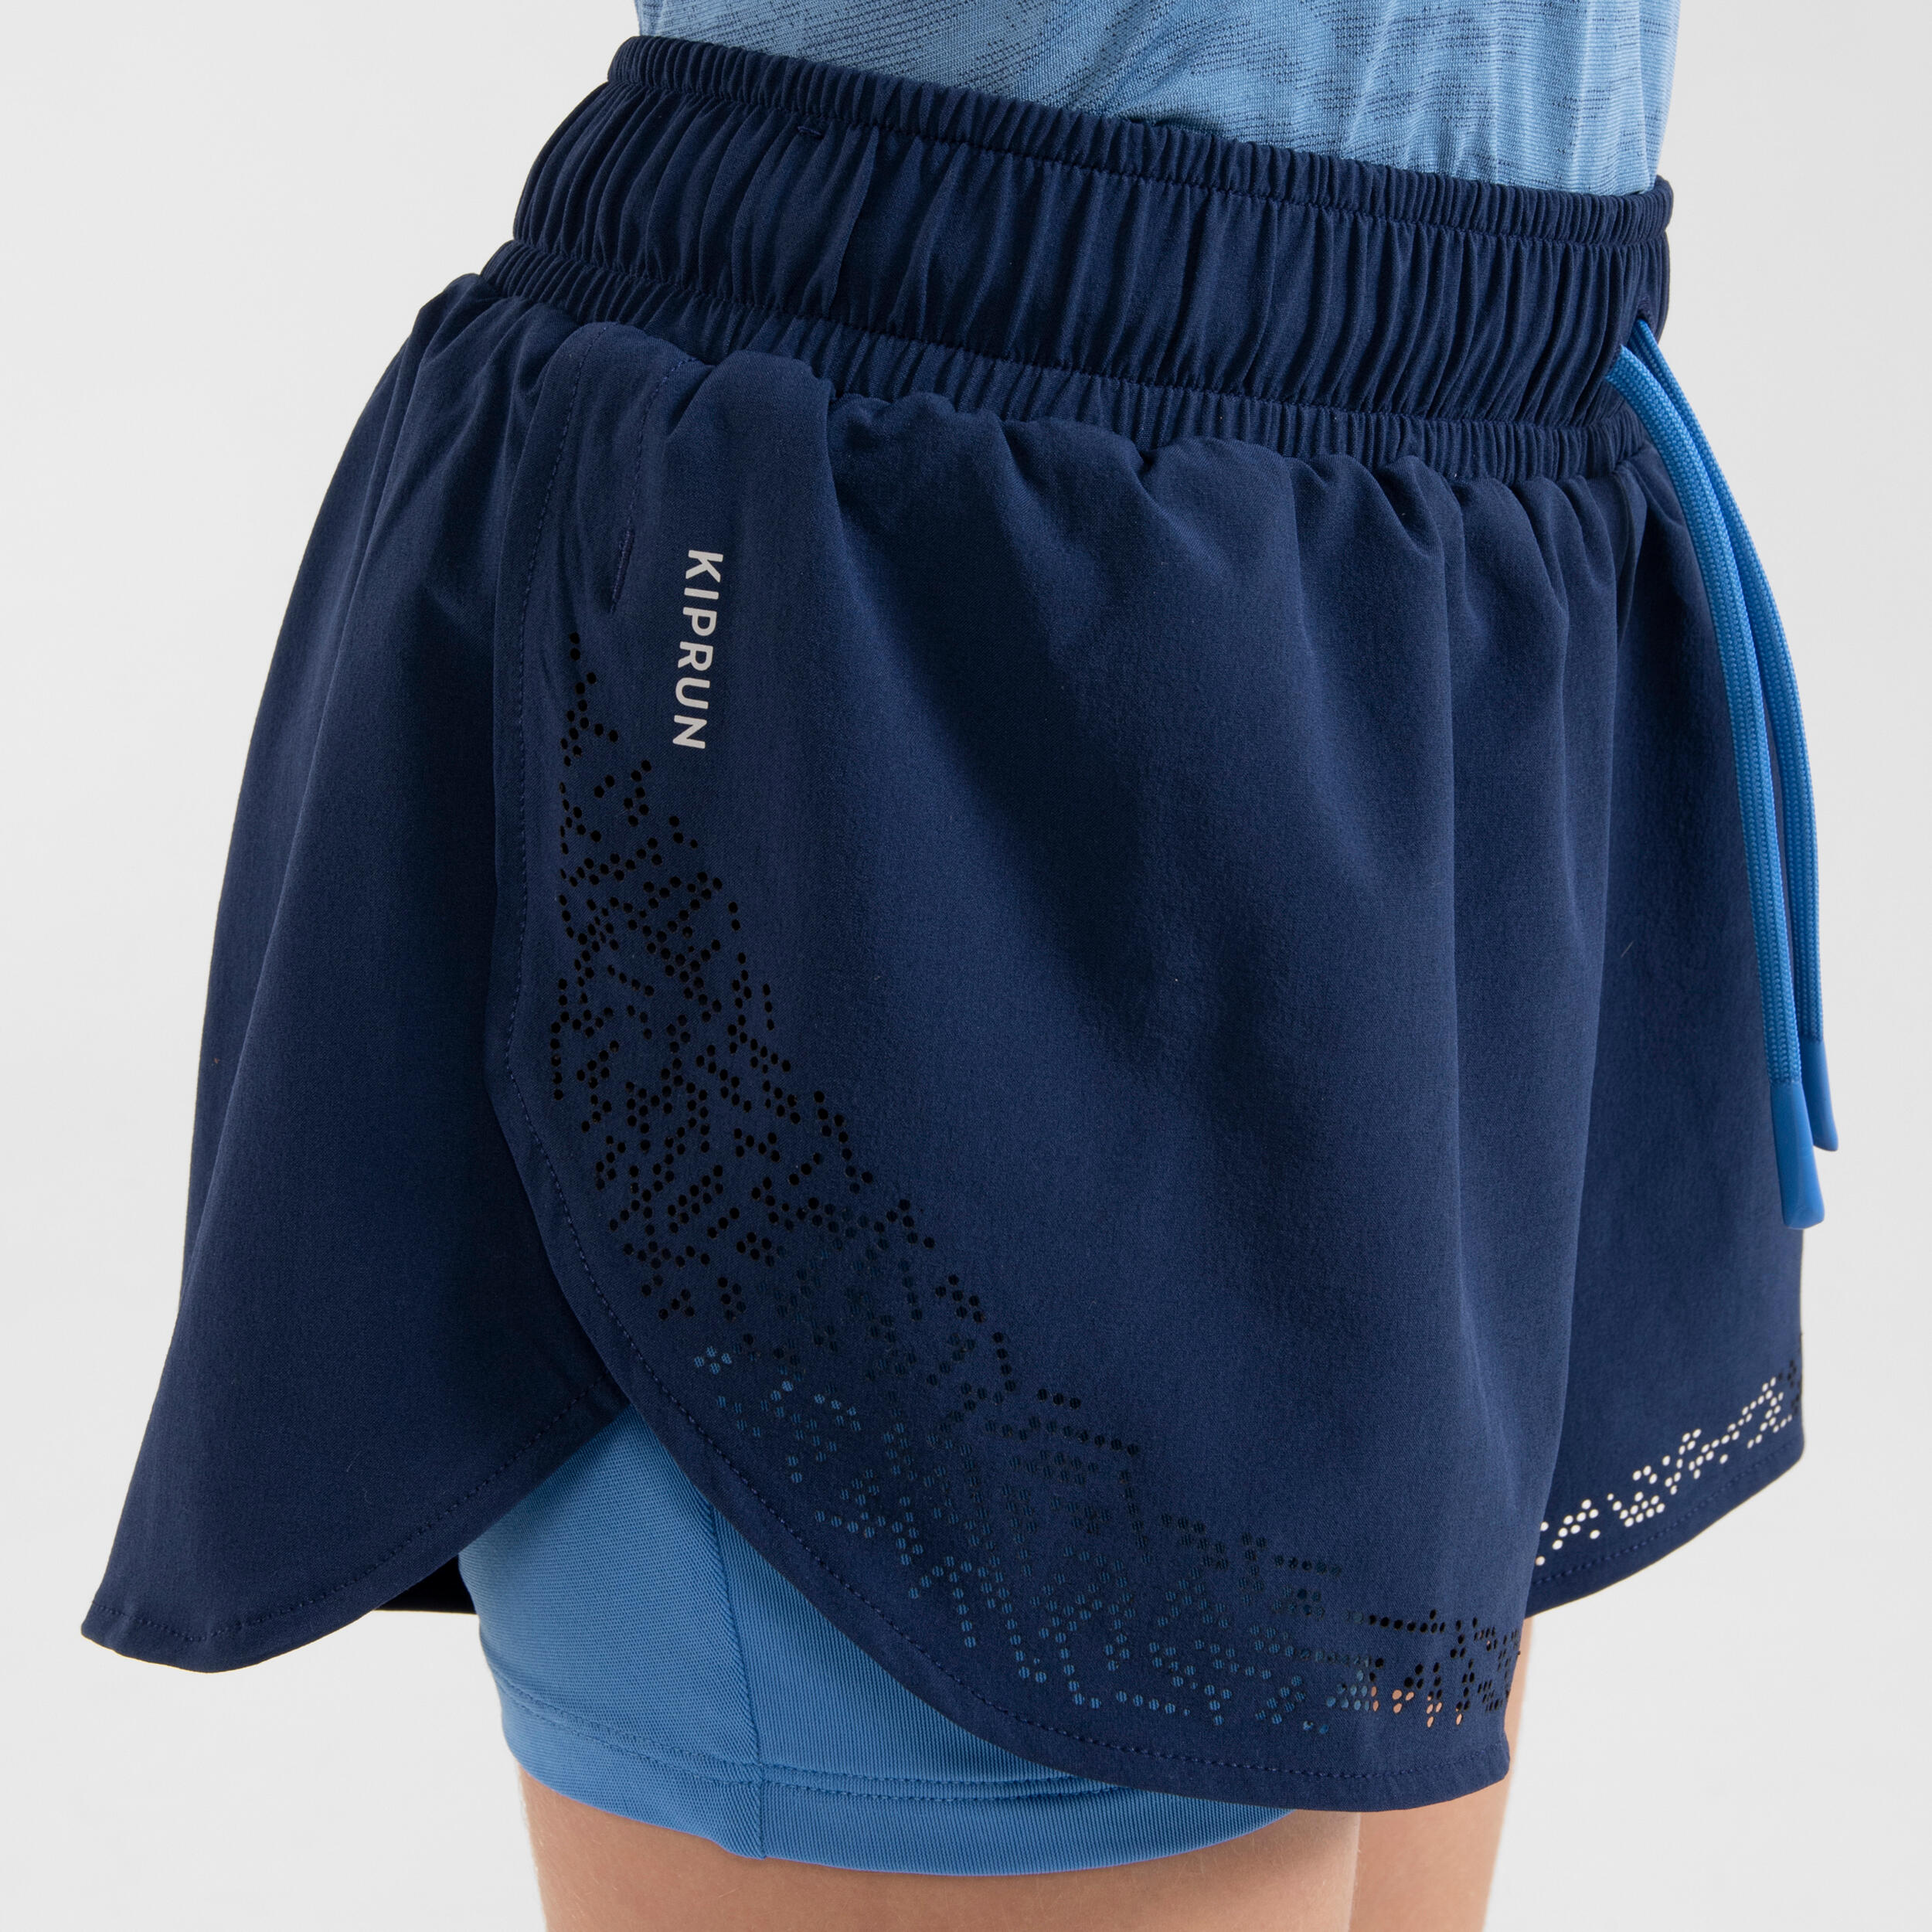 KIPRUN DRY+ Girls' 2-in-1 Running Tight Shorts - navy and blue 9/16